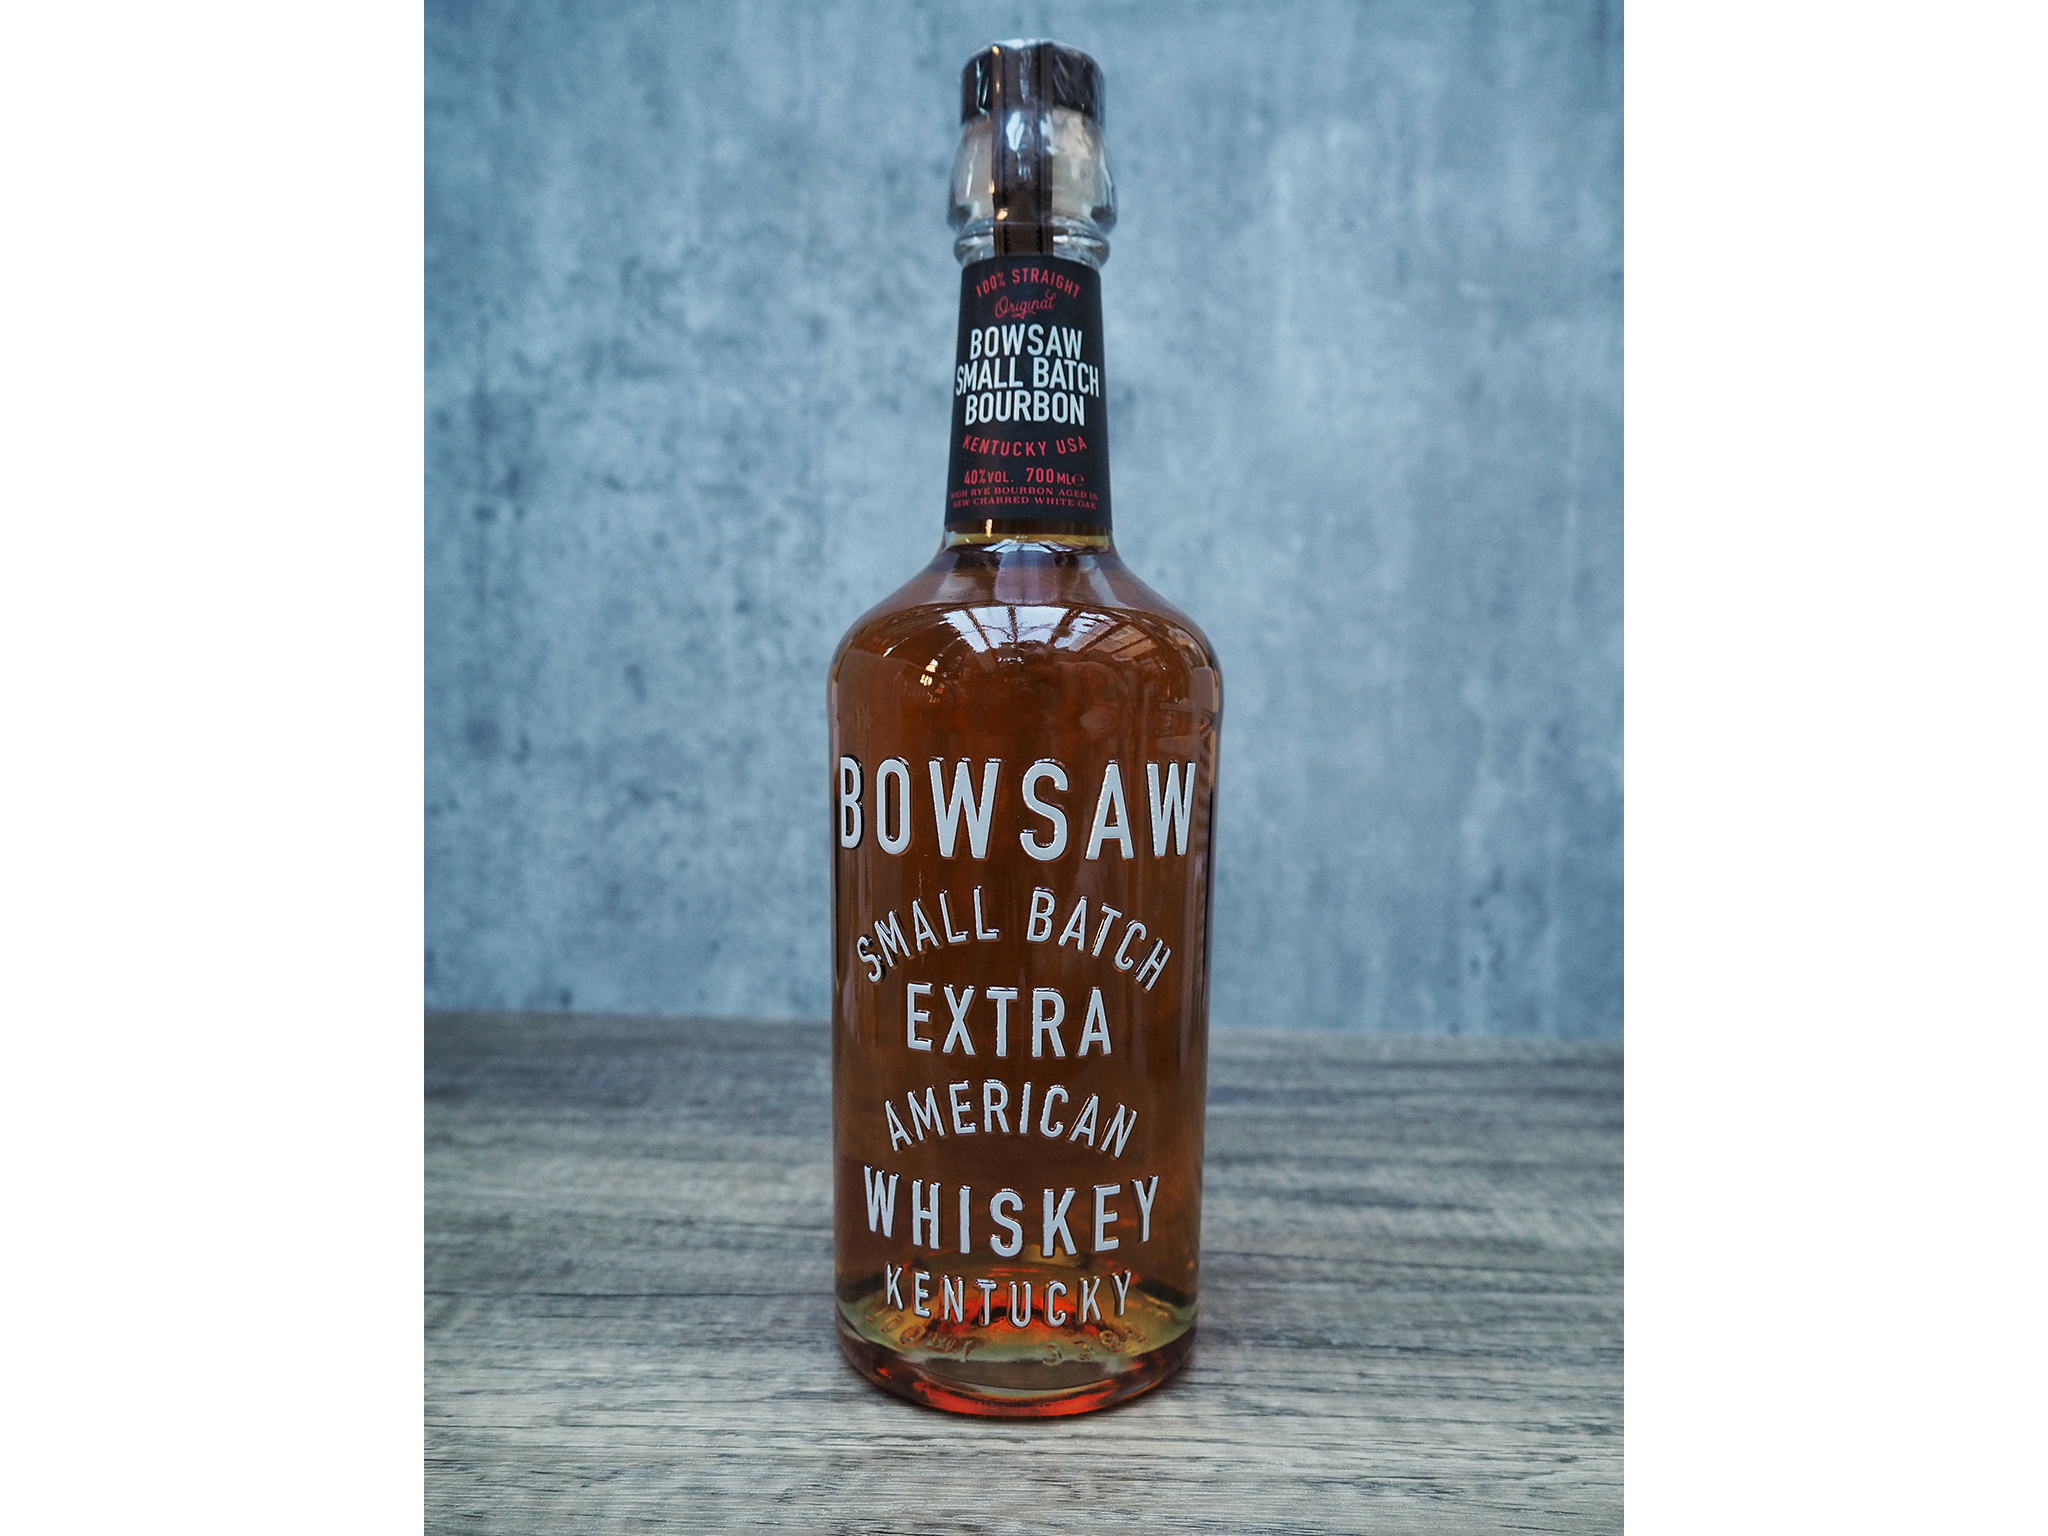 Bowsaw straight bourbon whiskey